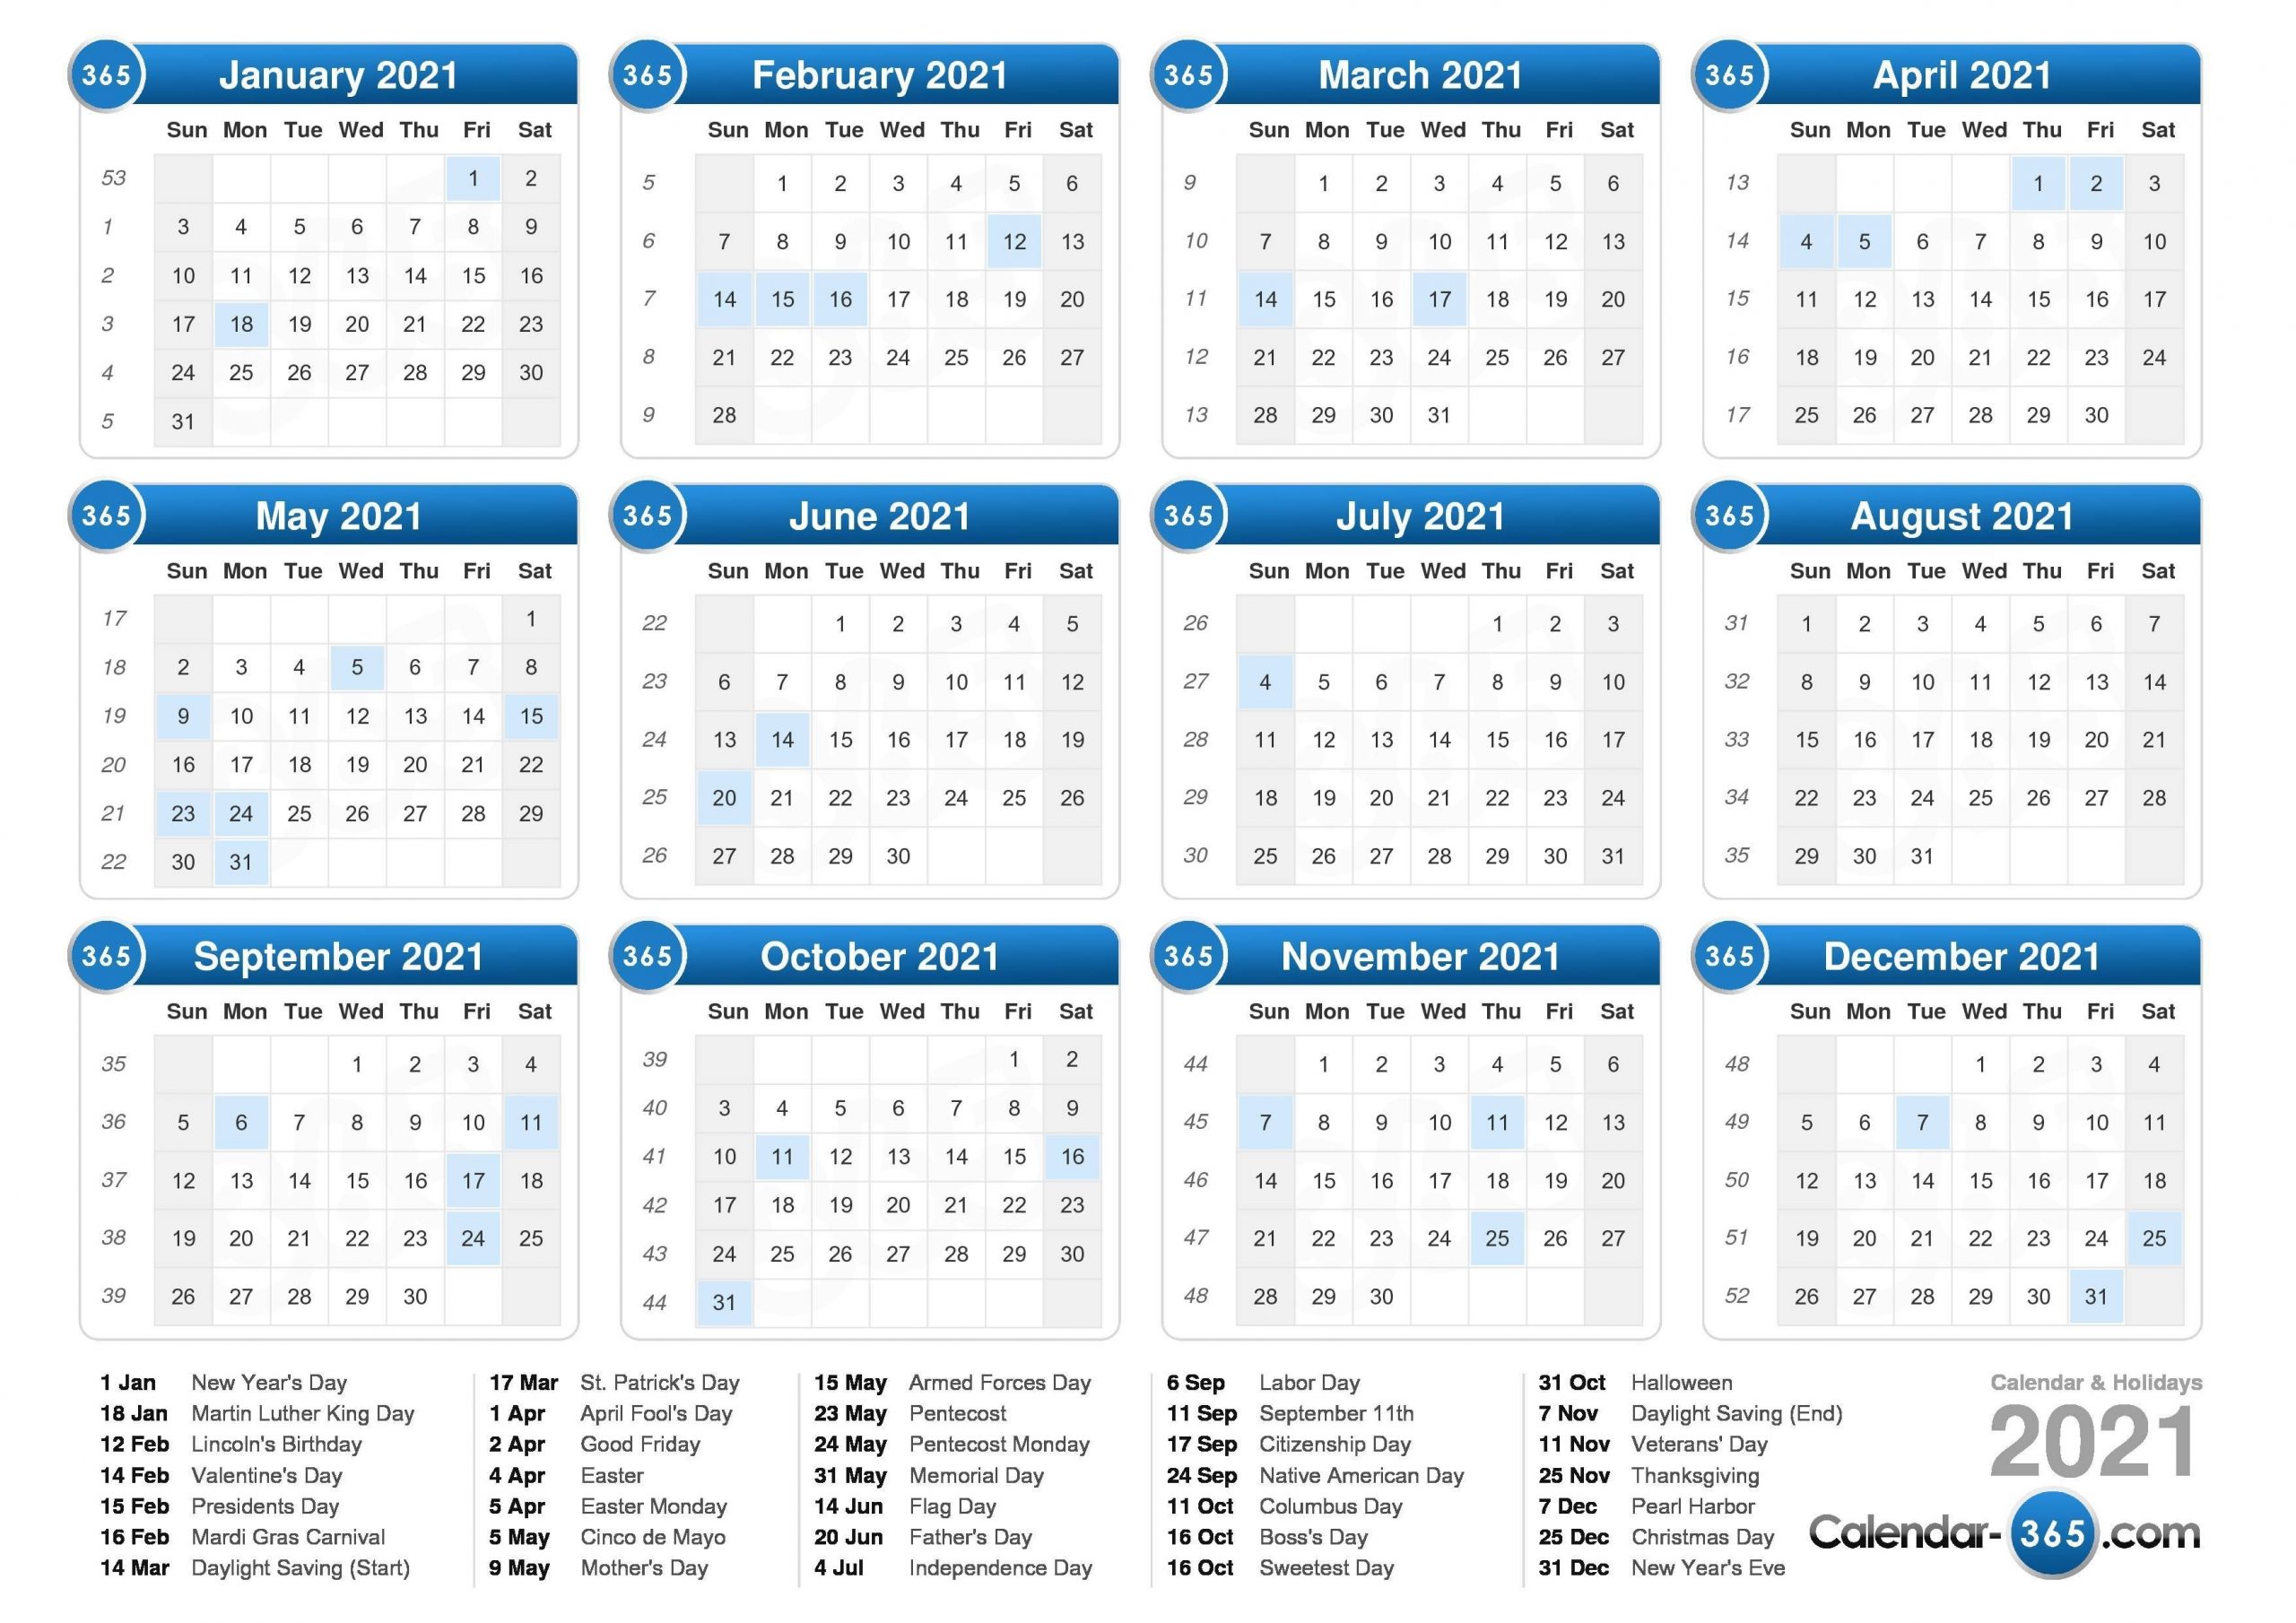 2021 Calendar-2021 Vacation Calandar